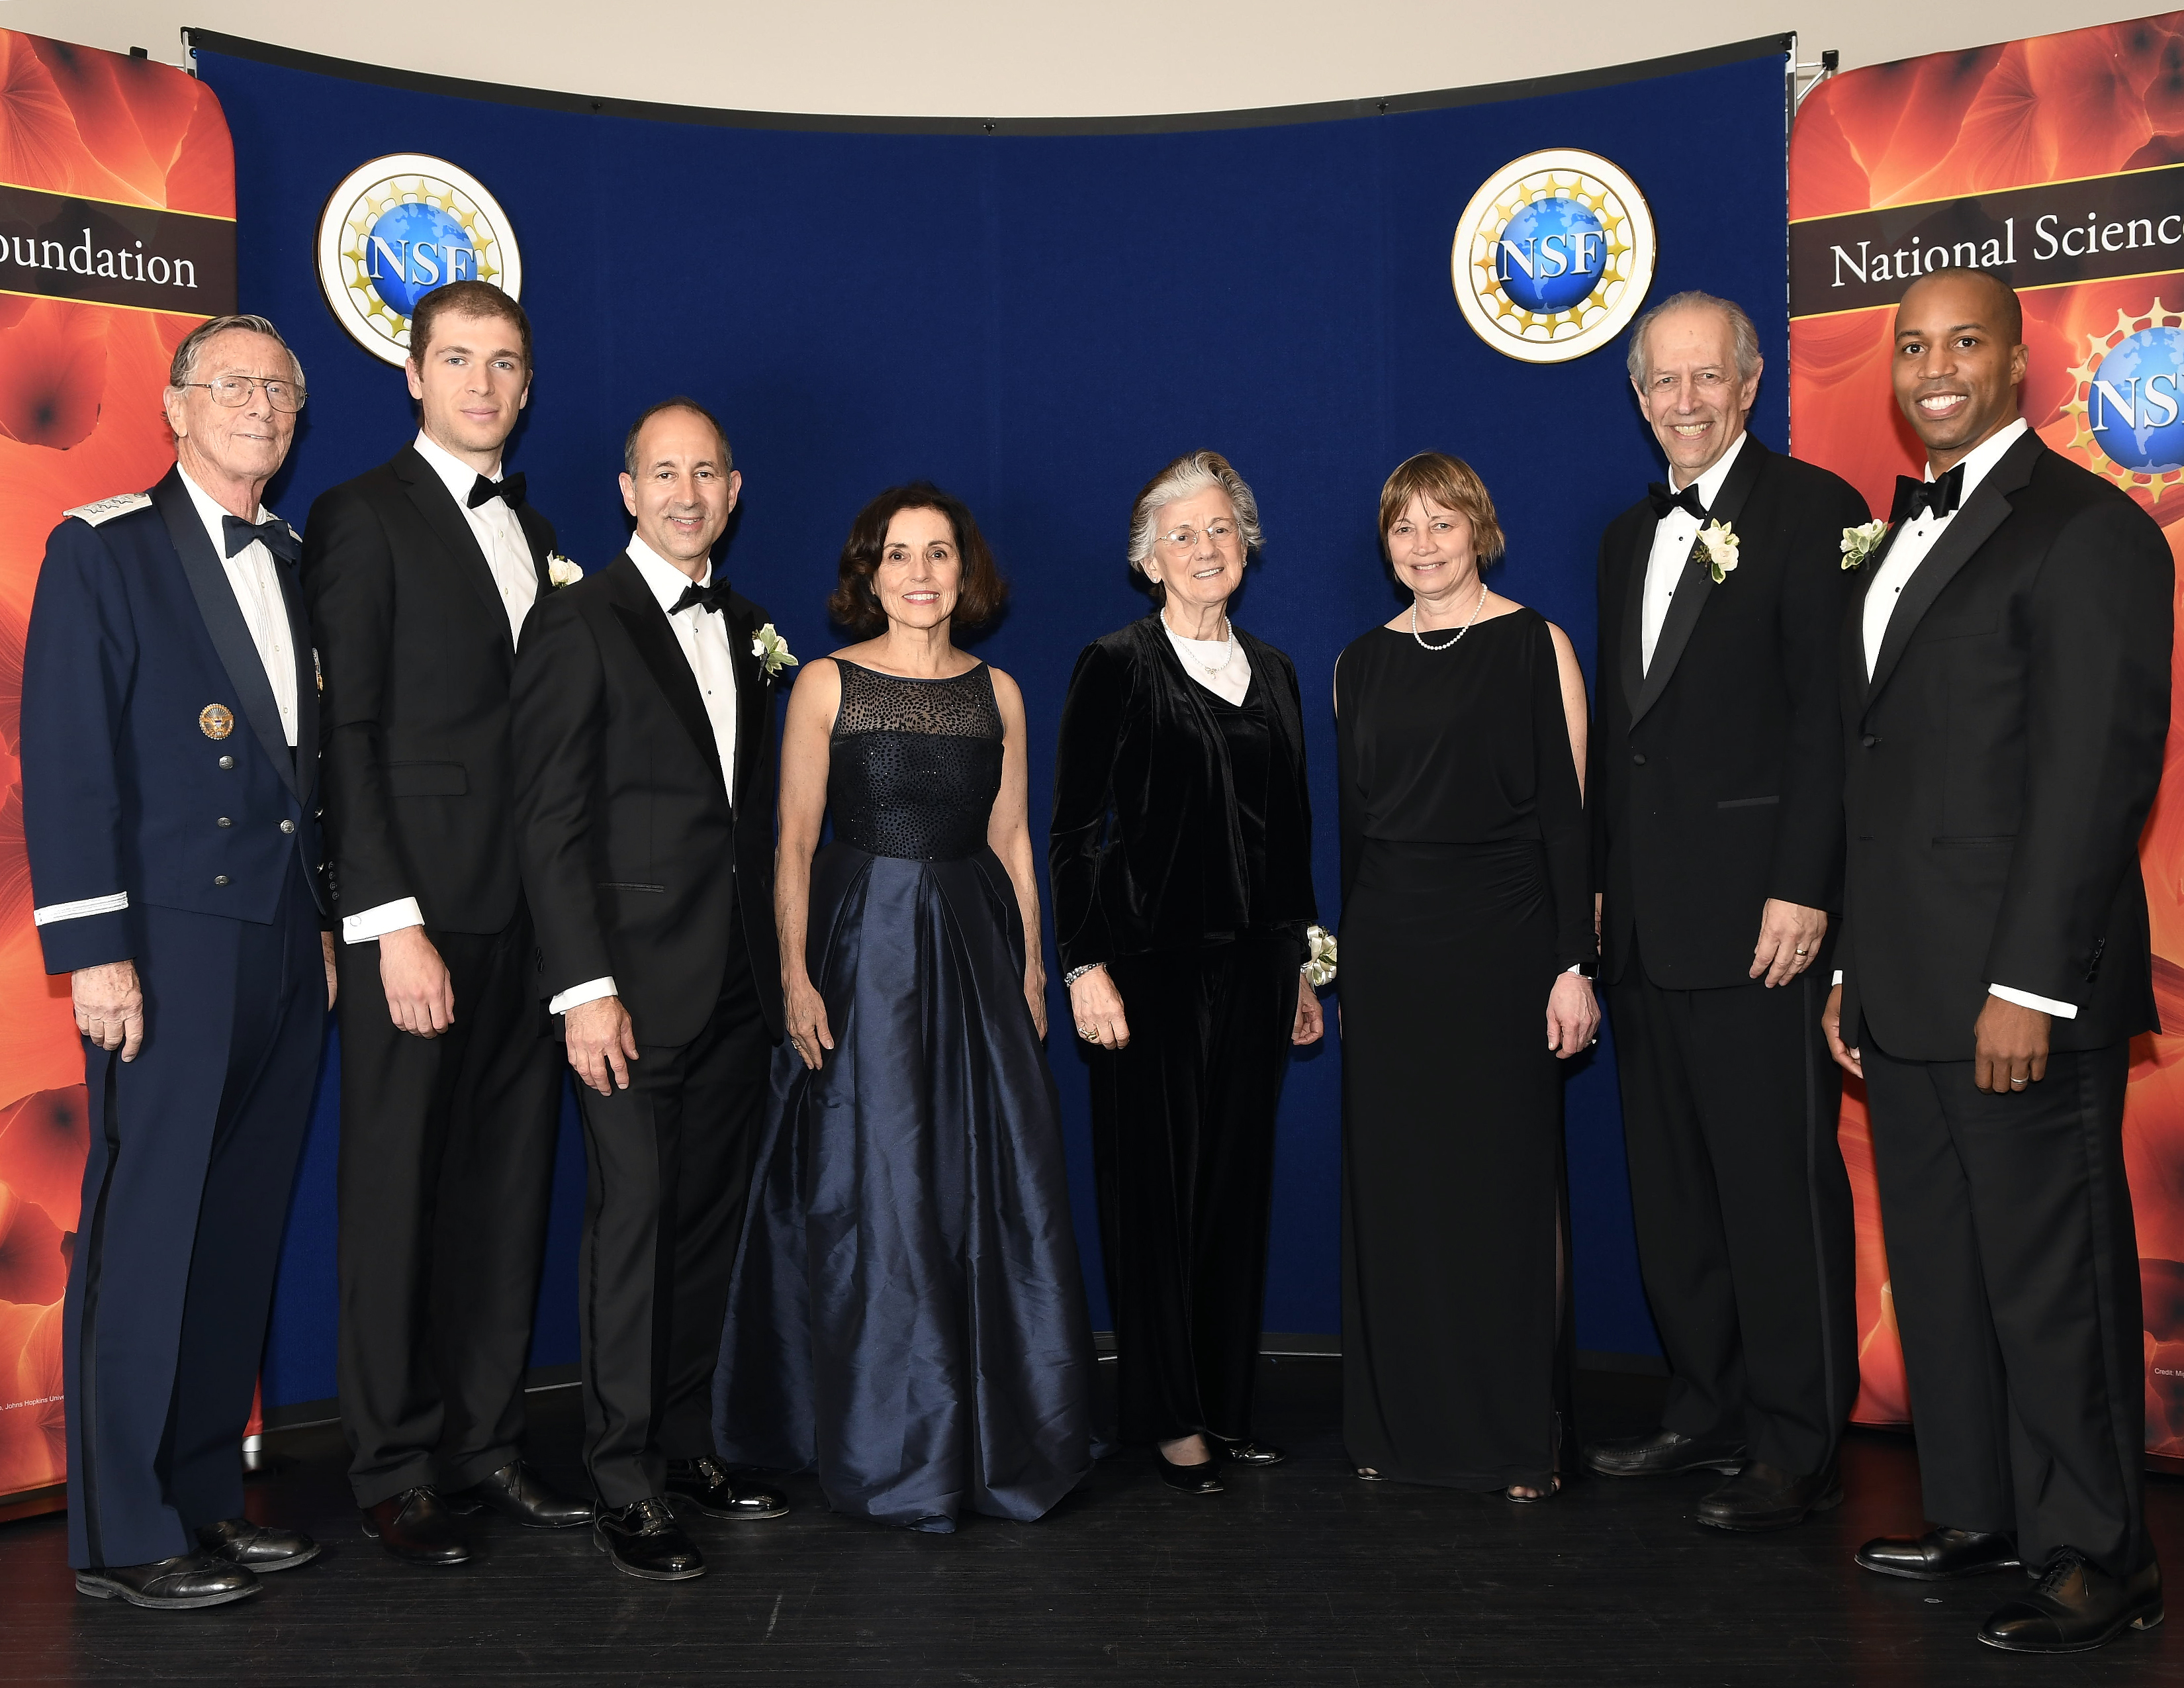 Córdova, Zuber, and 2017 Honorary Awardees